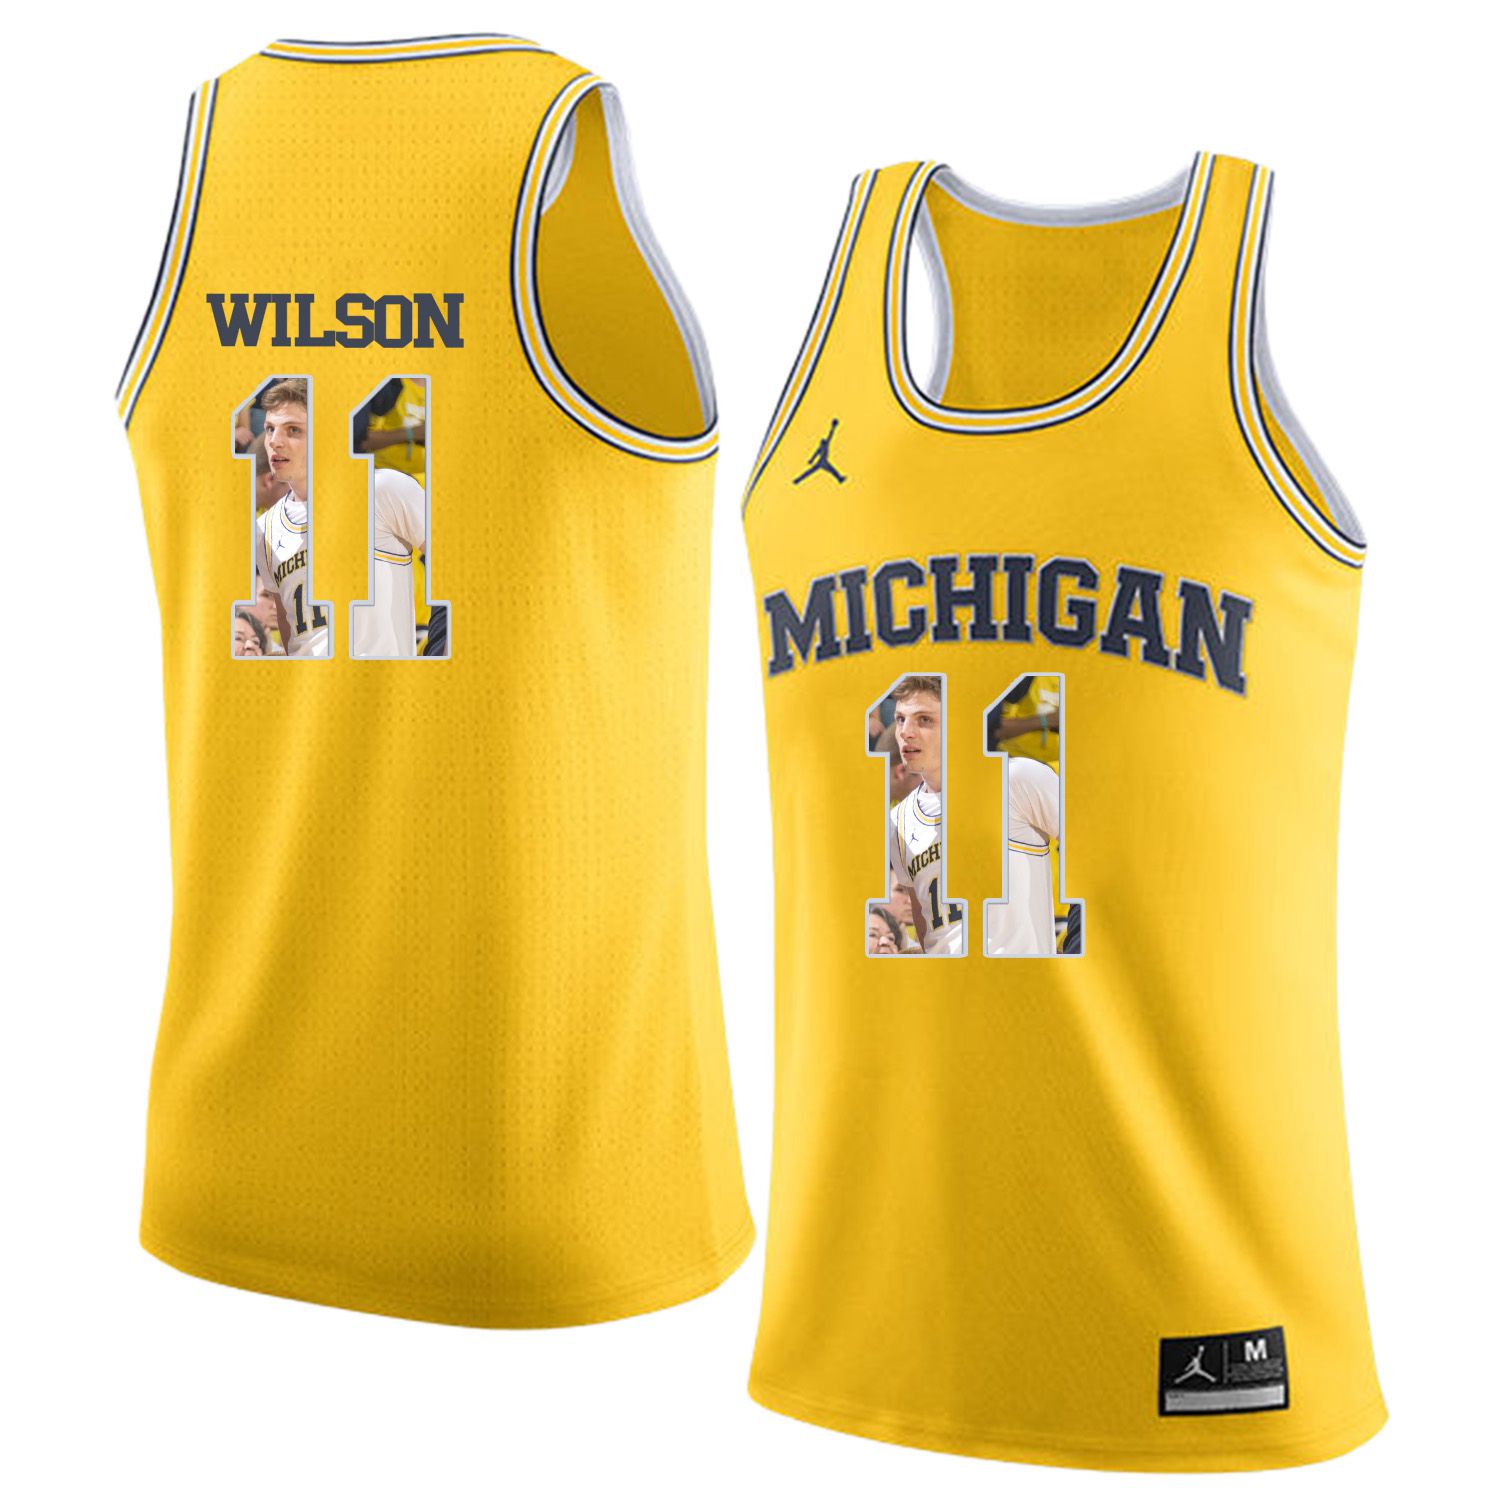 Men Jordan University of Michigan Basketball Yellow 11 Wilson Fashion Edition Customized NCAA Jerseys